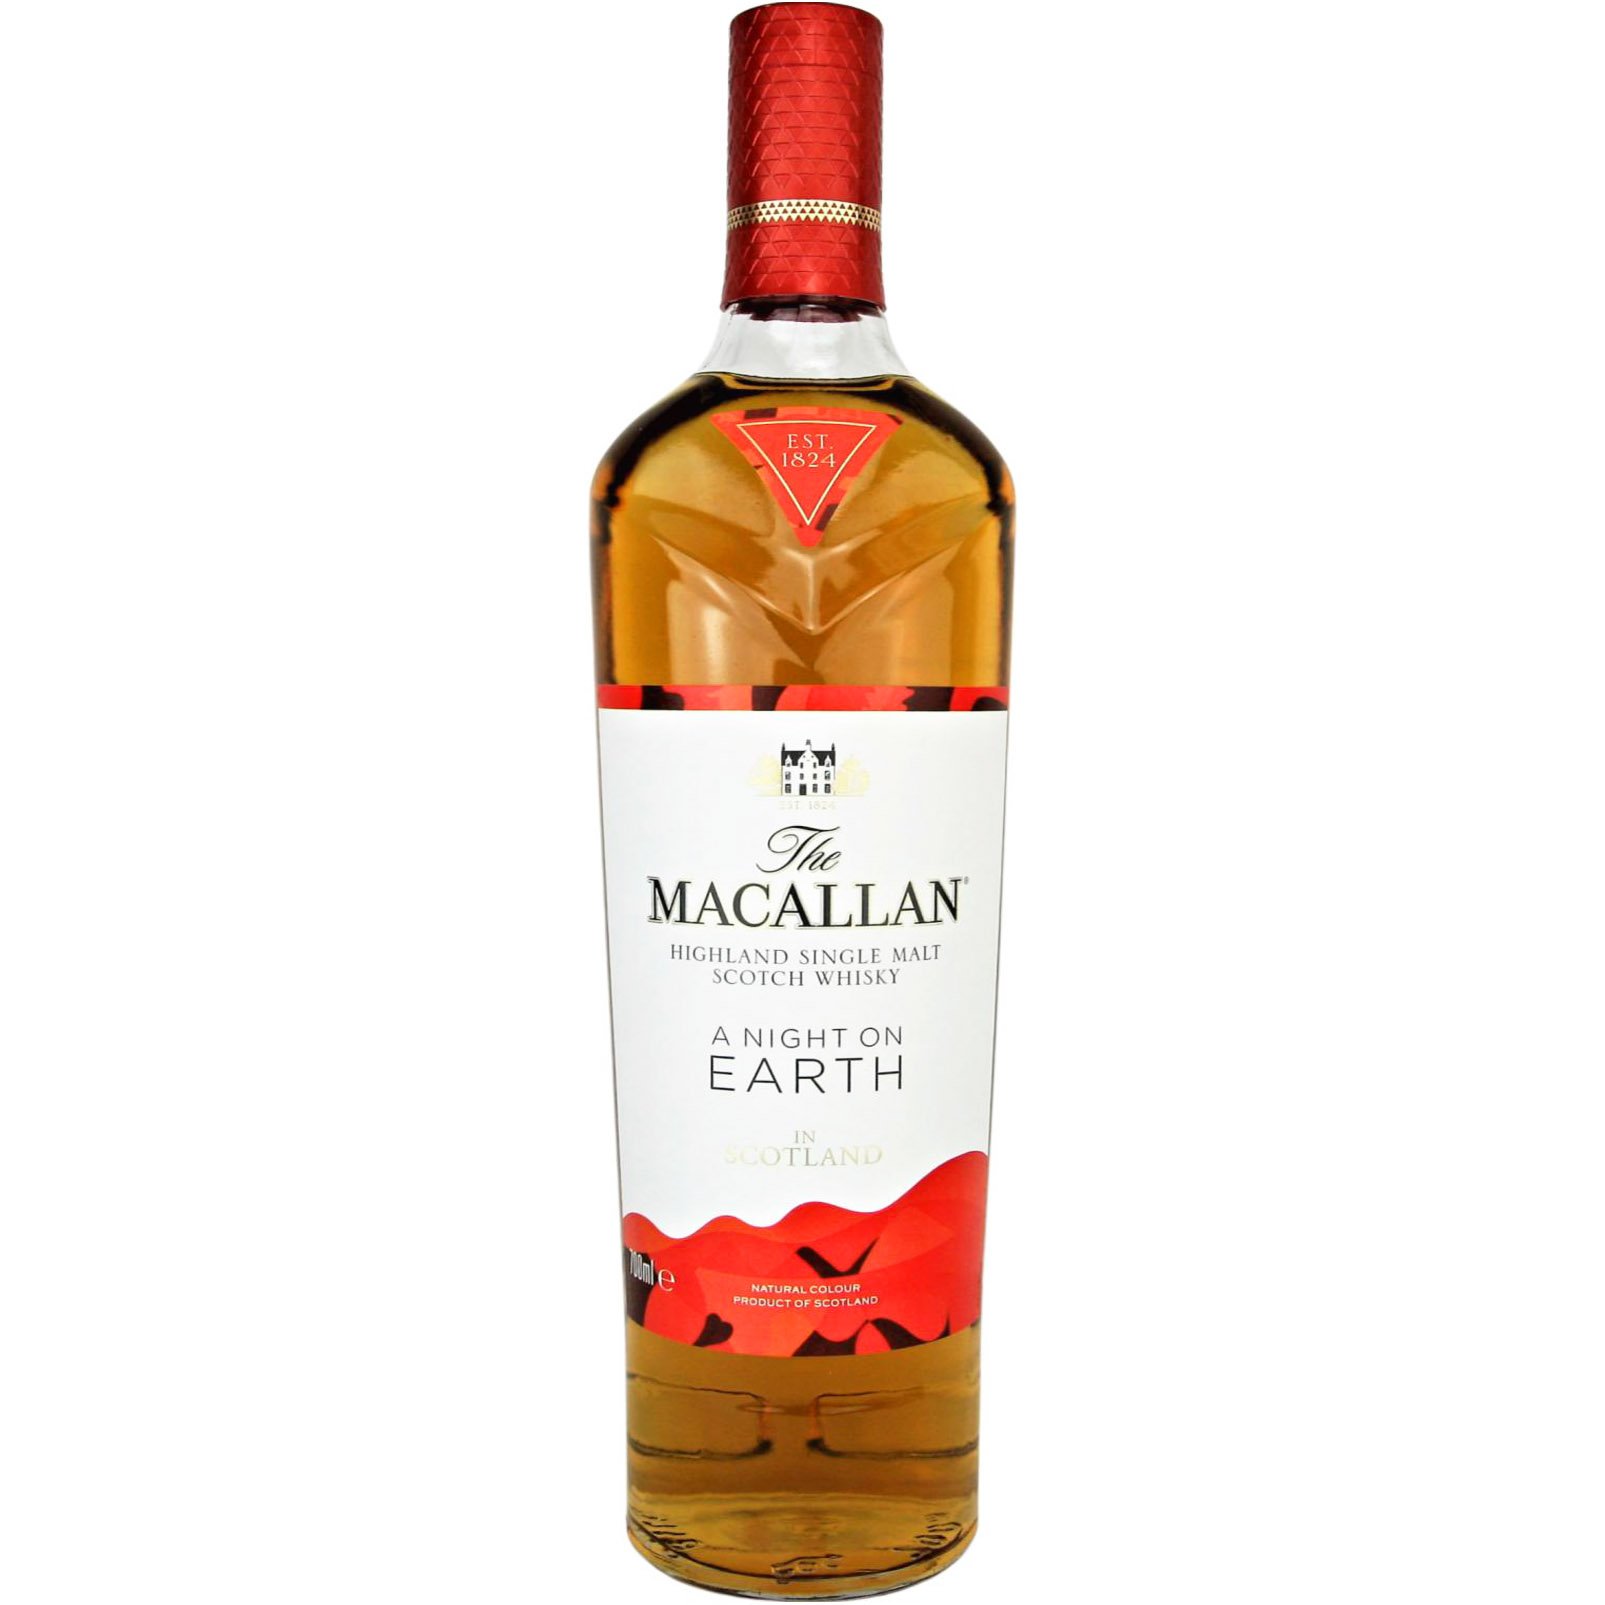 Віскі The Macallan A Night On Earth Highland Single Malt Scotch Whisky 43% 0.7 л - фото 1